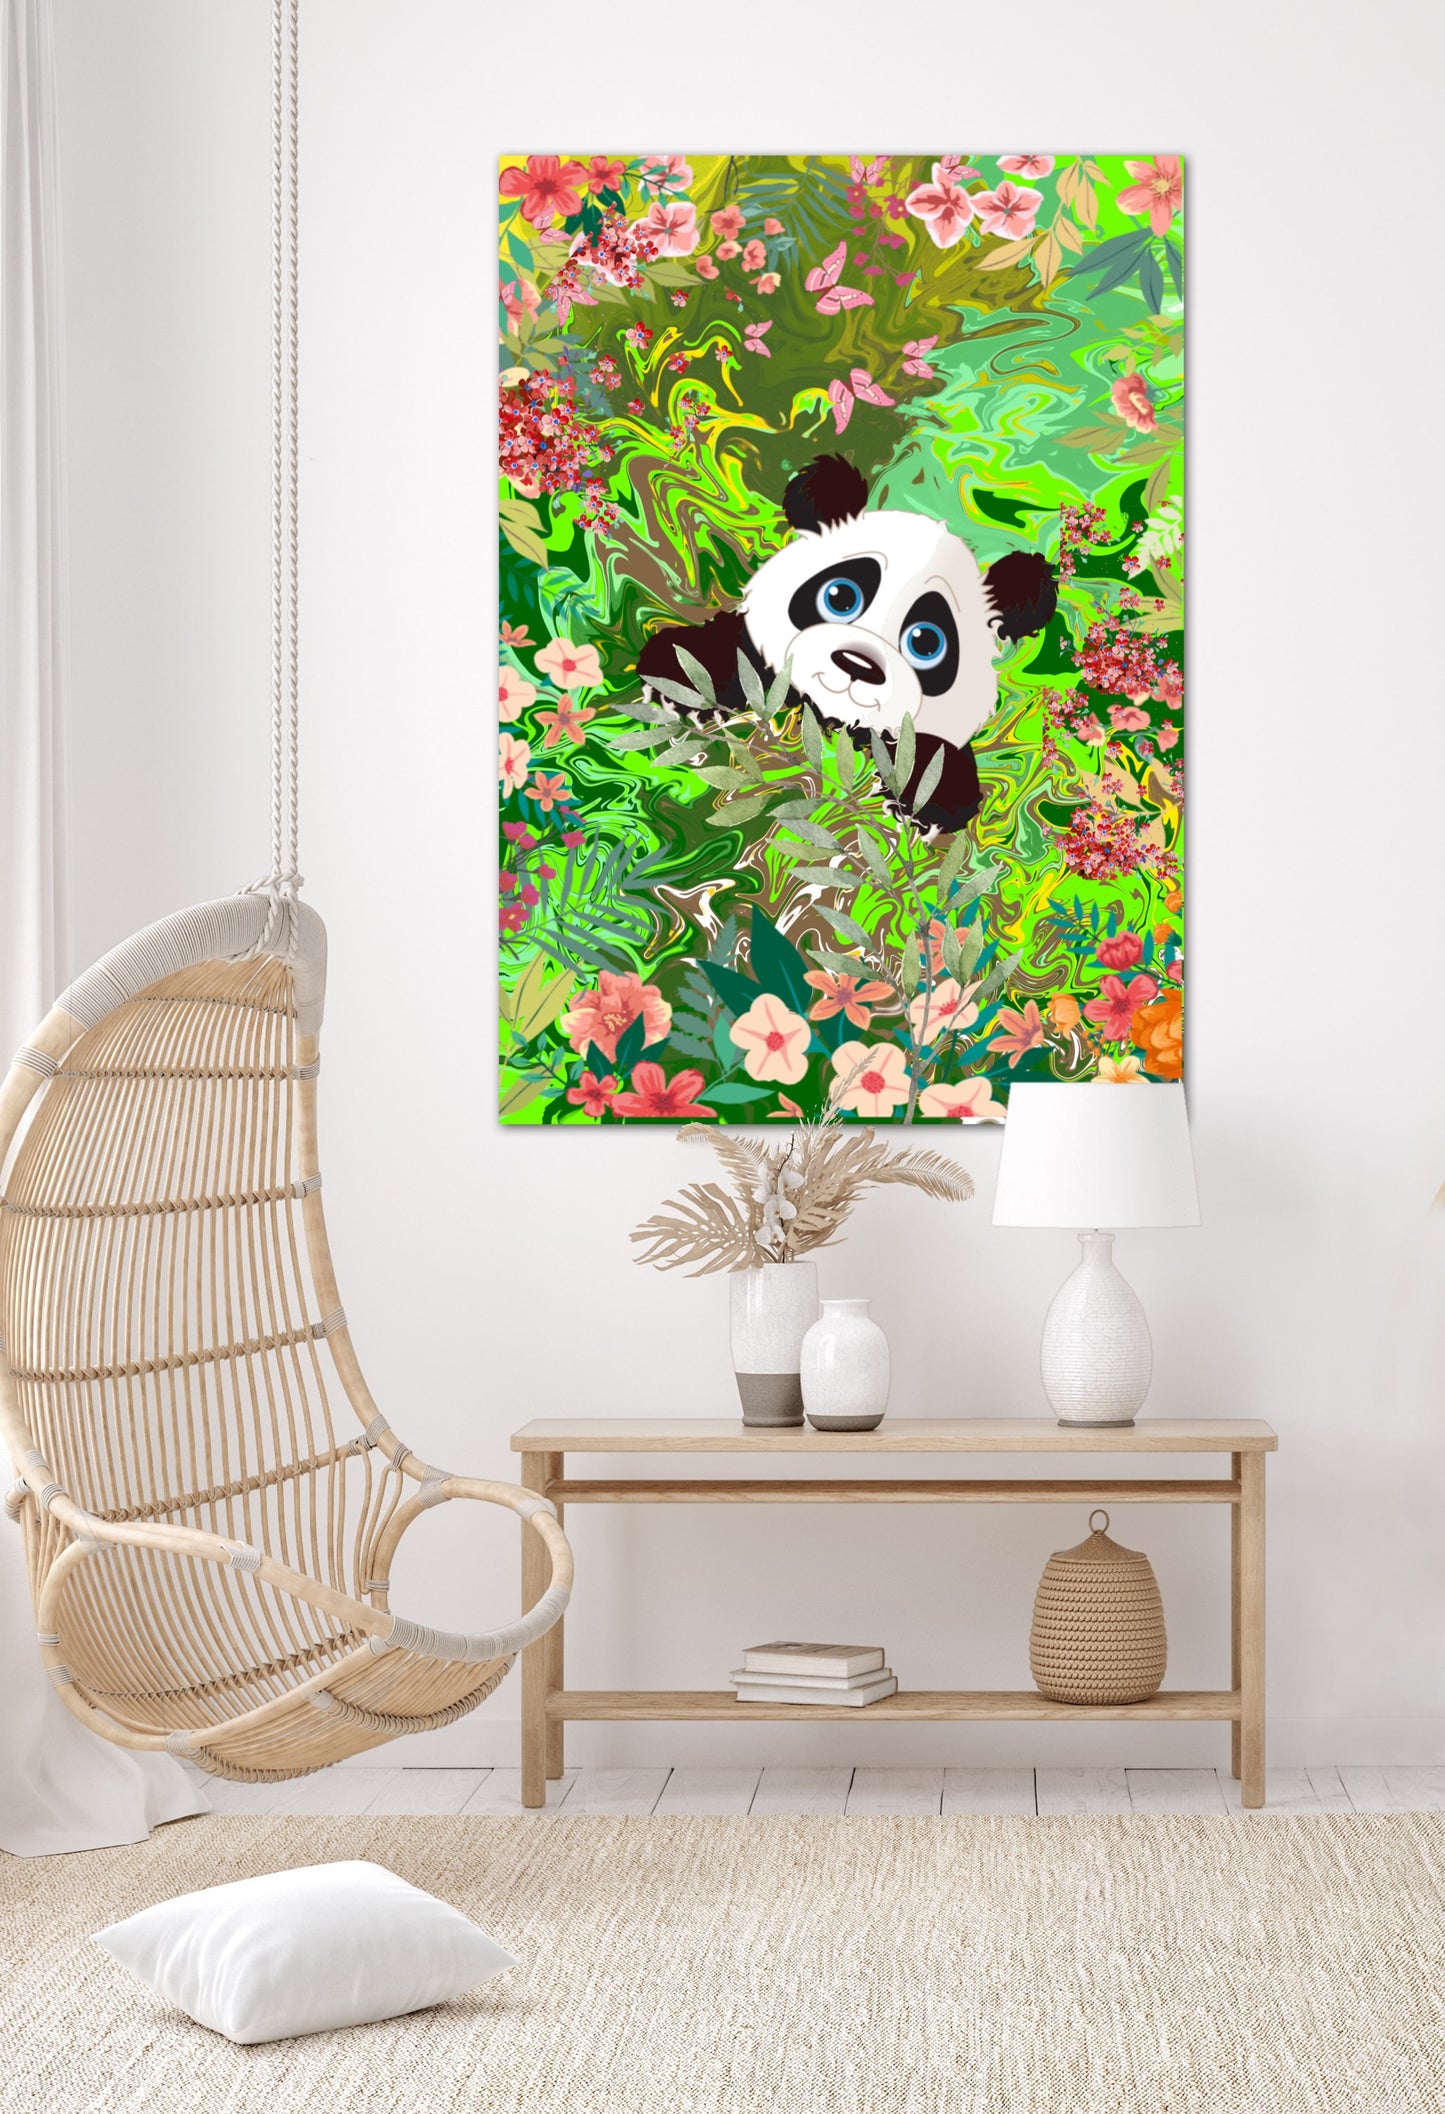 Panda Bear Art Painting Print on Canvas